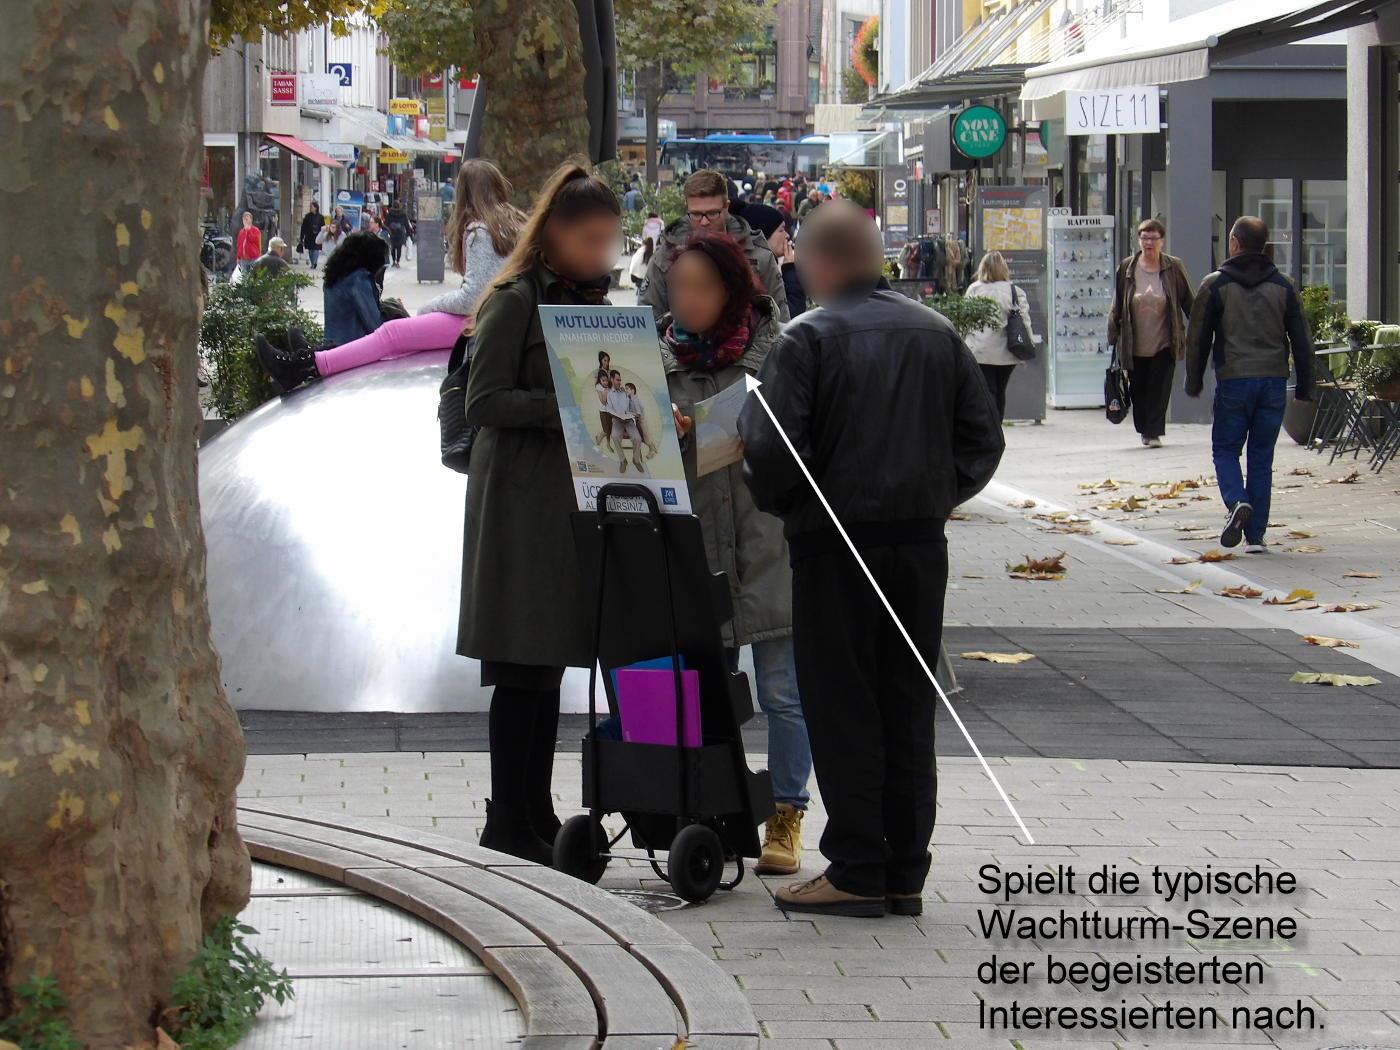 Heilbronn: Jehovah's Witnesses' major repair campaign